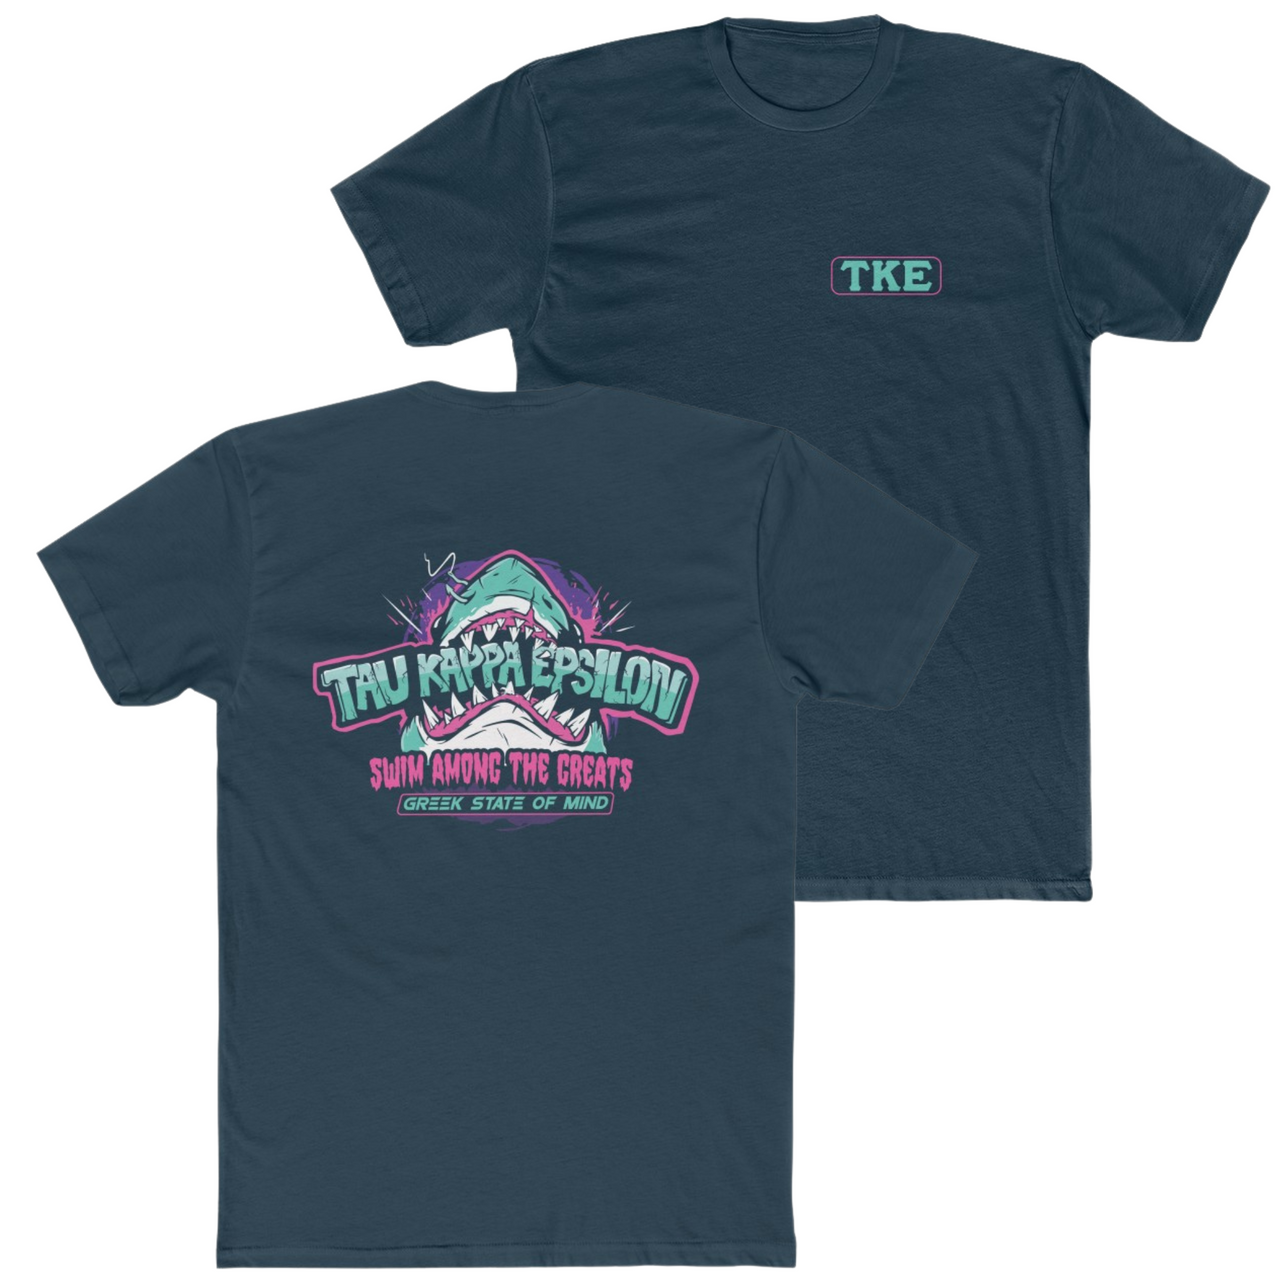 Navy Tau Kappa Epsilon Graphic T-Shirt | The Deep End | Tau Kappa Epsilon Fraternity 